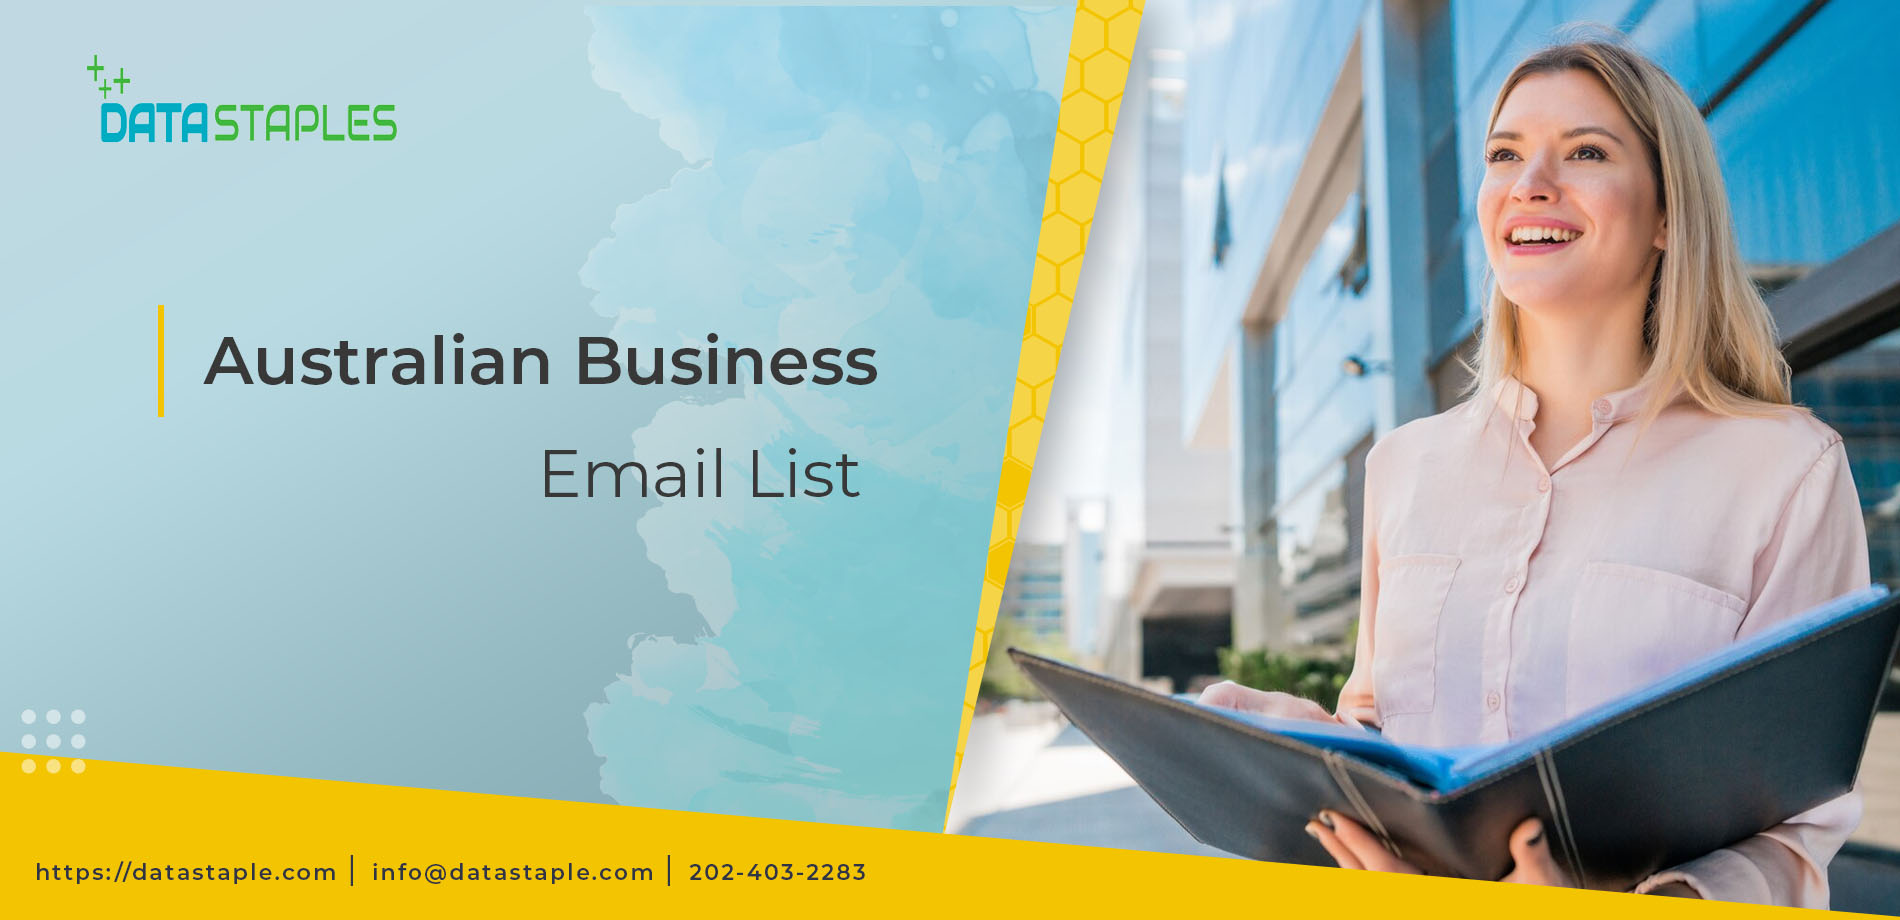 Australia Business Email List | DataStaples